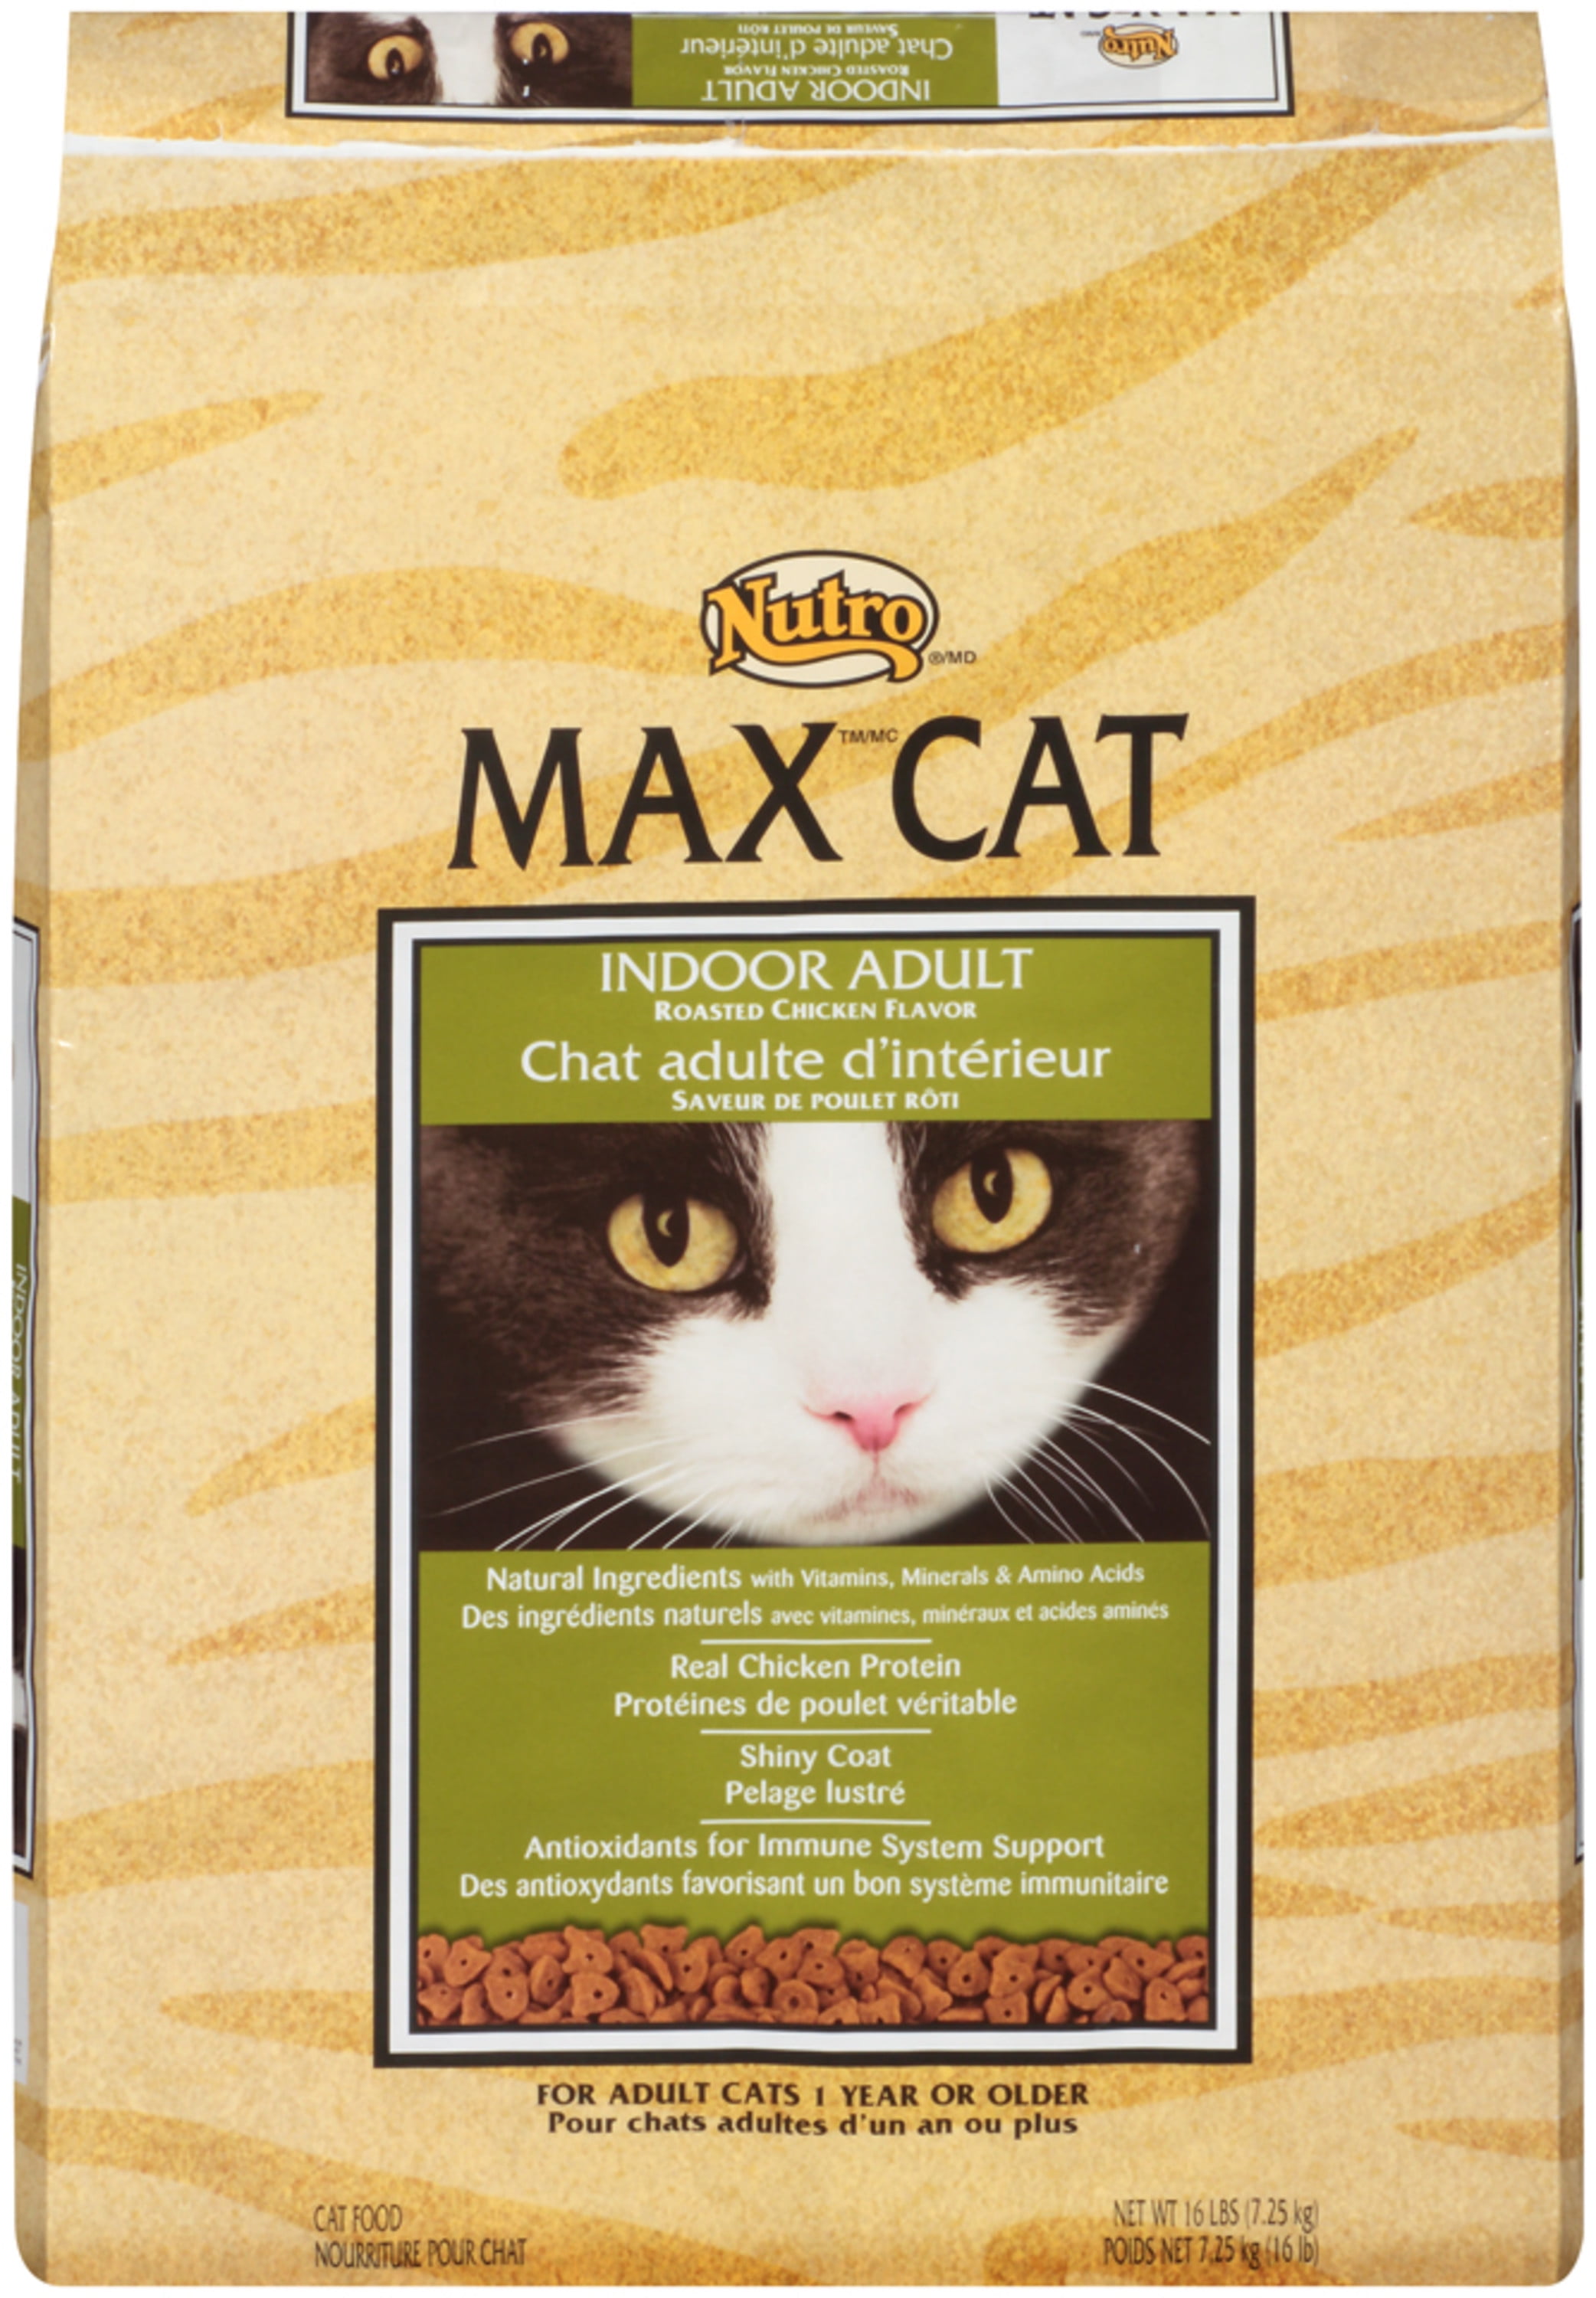 Nutro Max Cat Indoor Adult Roasted 